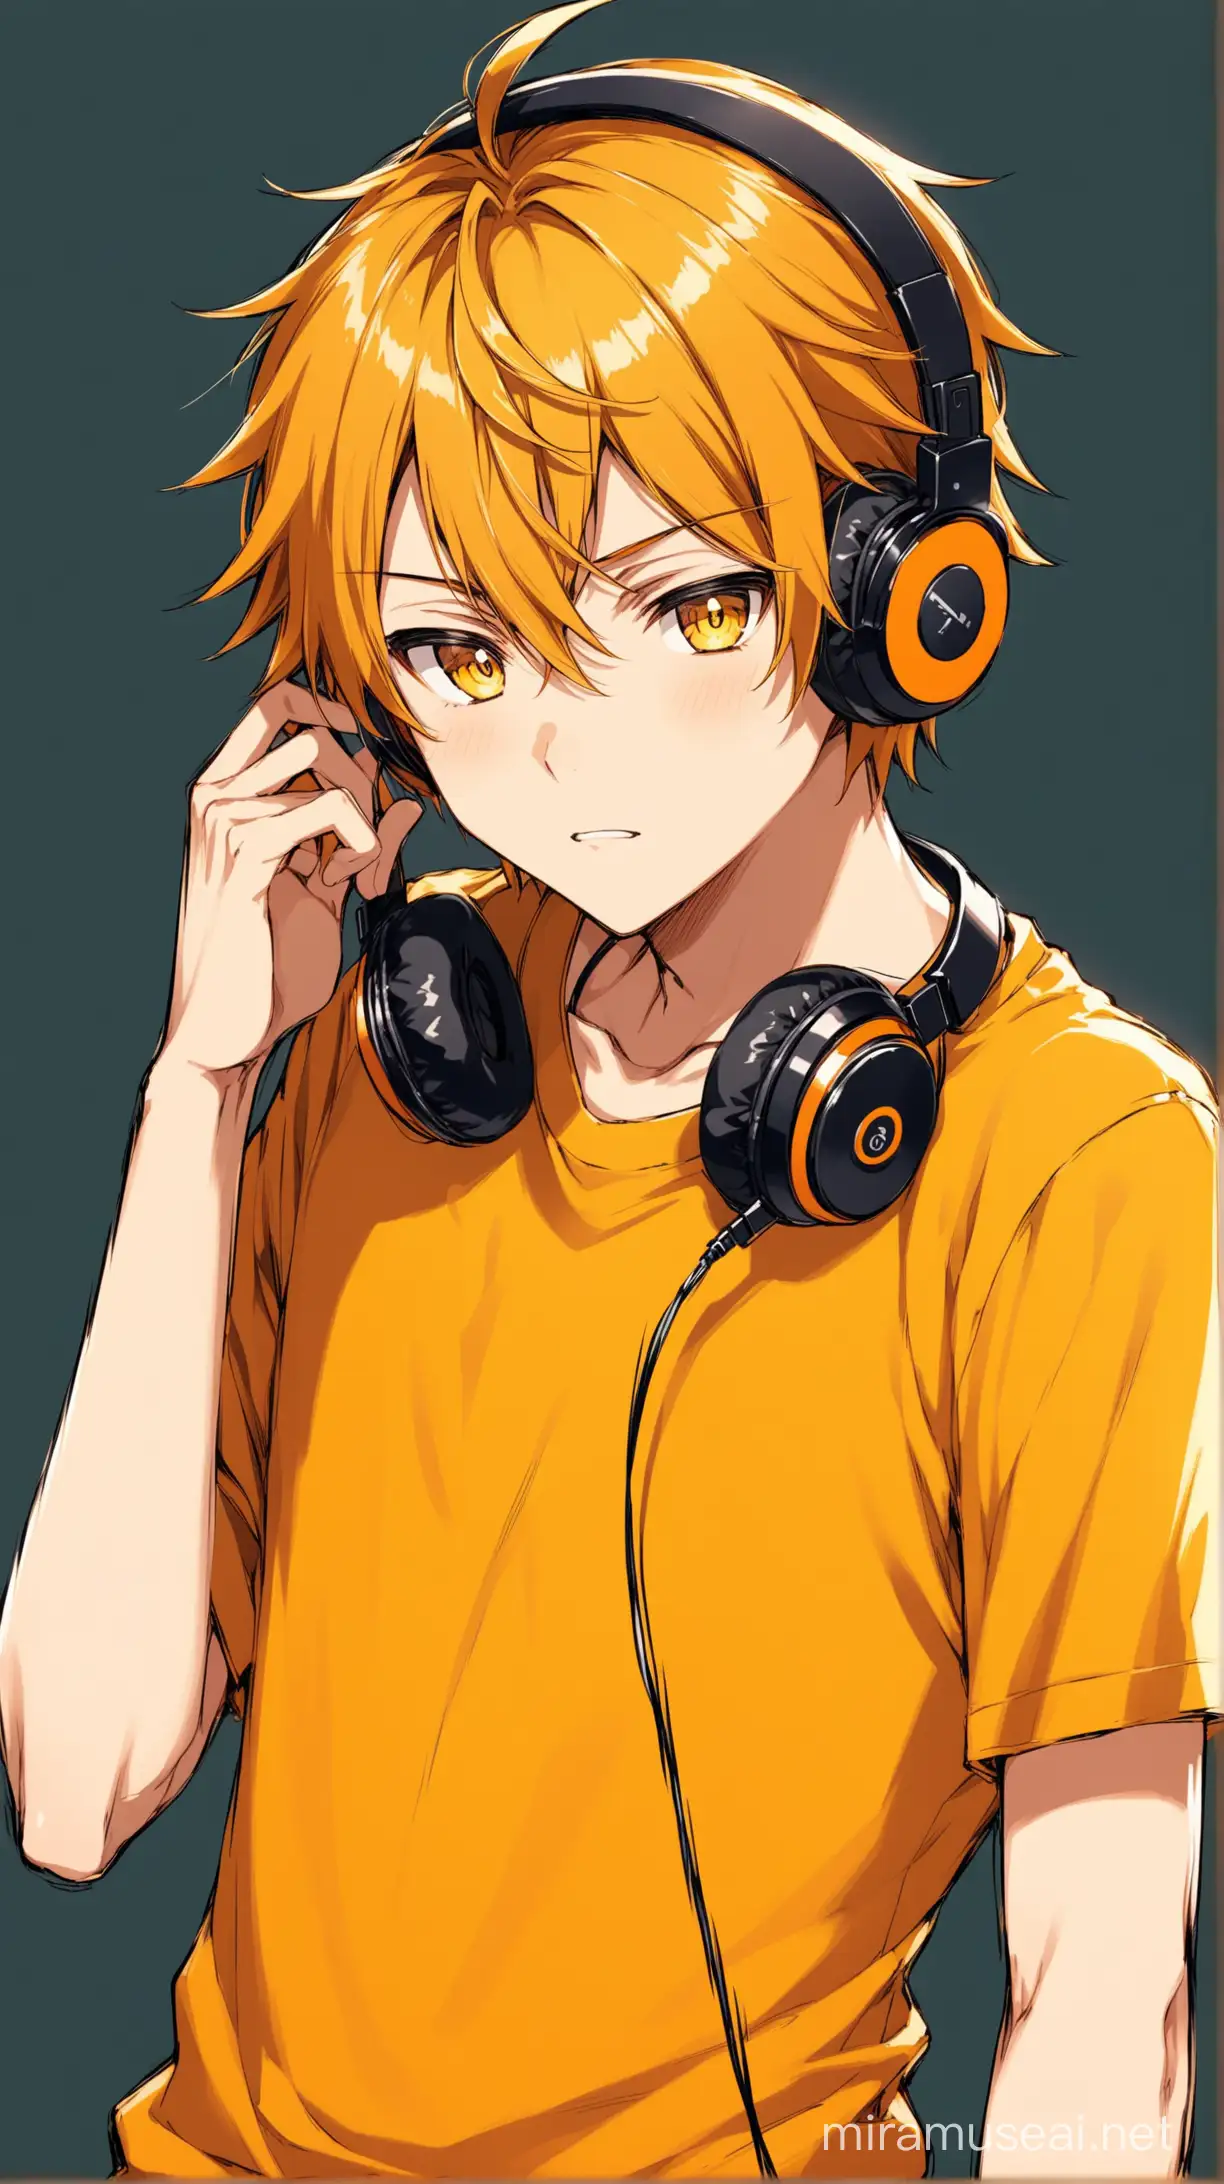 Anime Boy with Yellow Orange Shirt Wearing Headphones